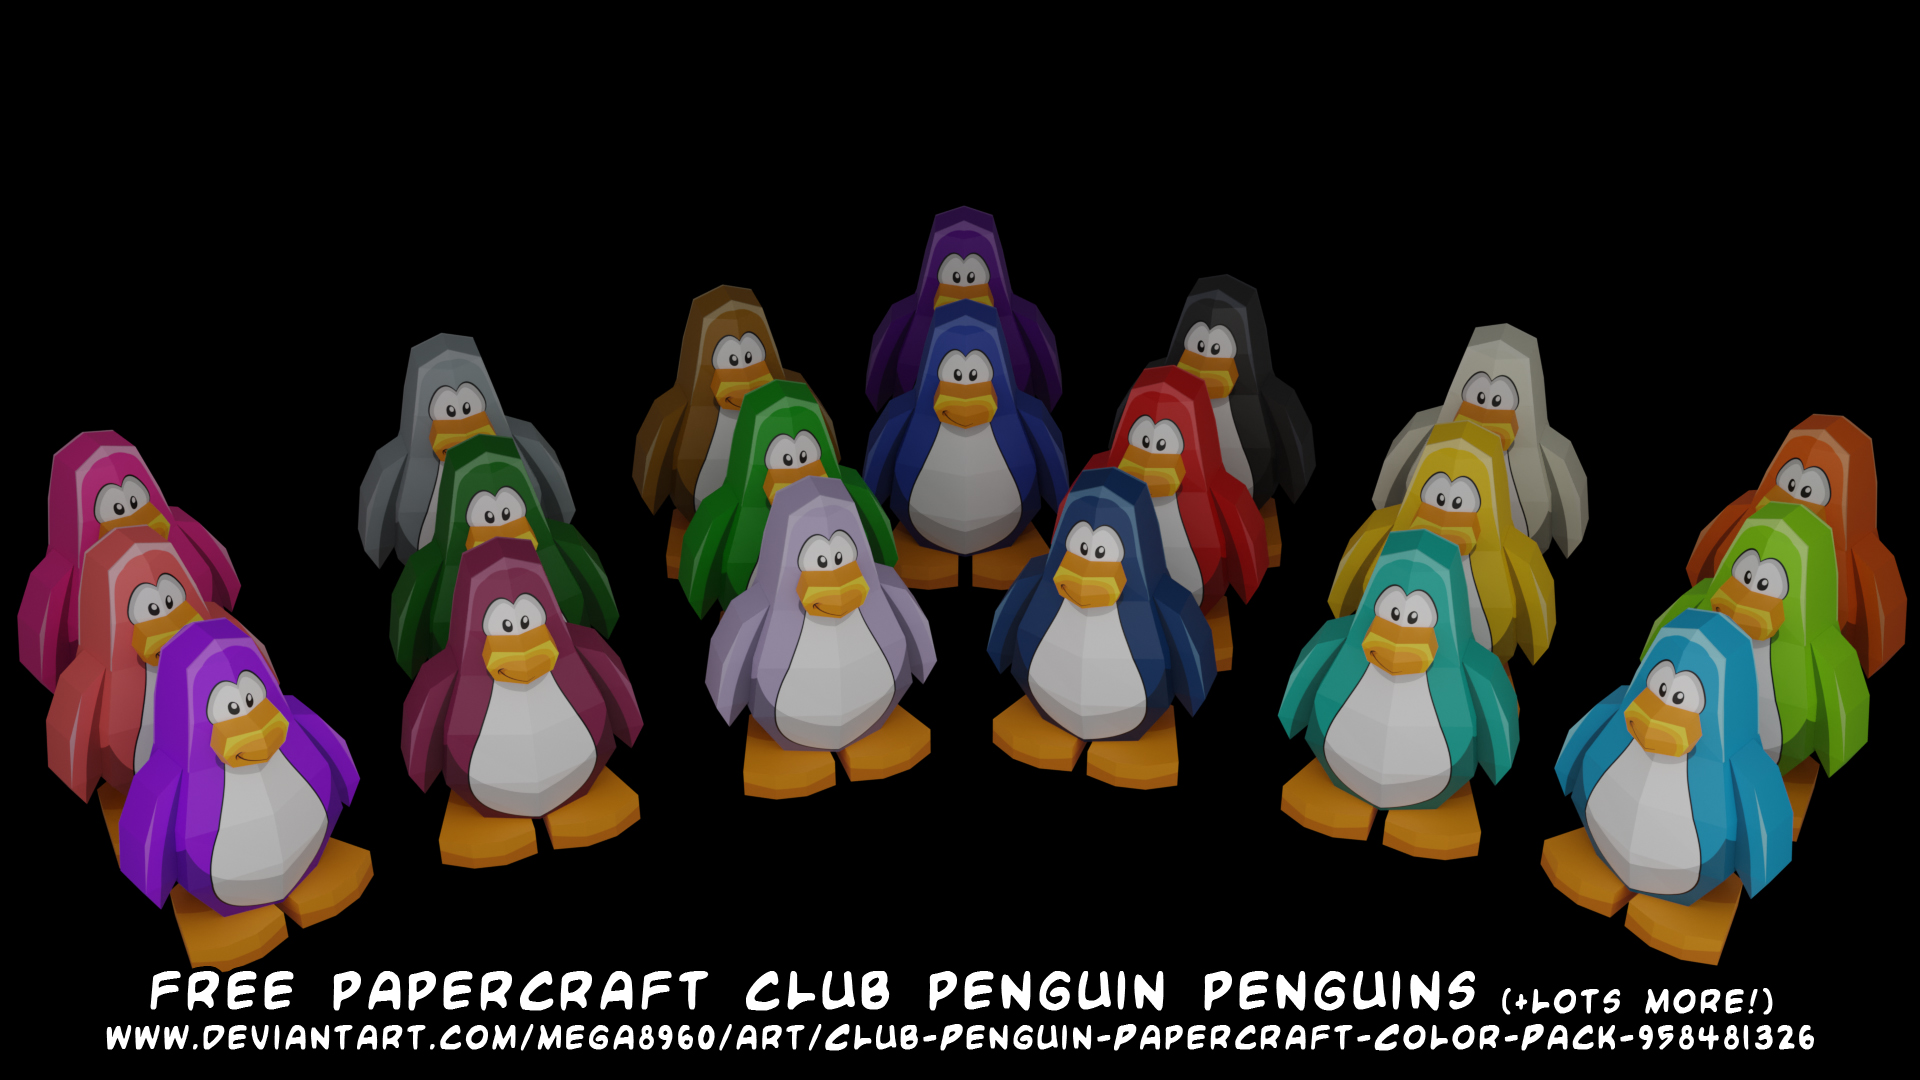 Papercraft weblog free cute club penguin papercrafts